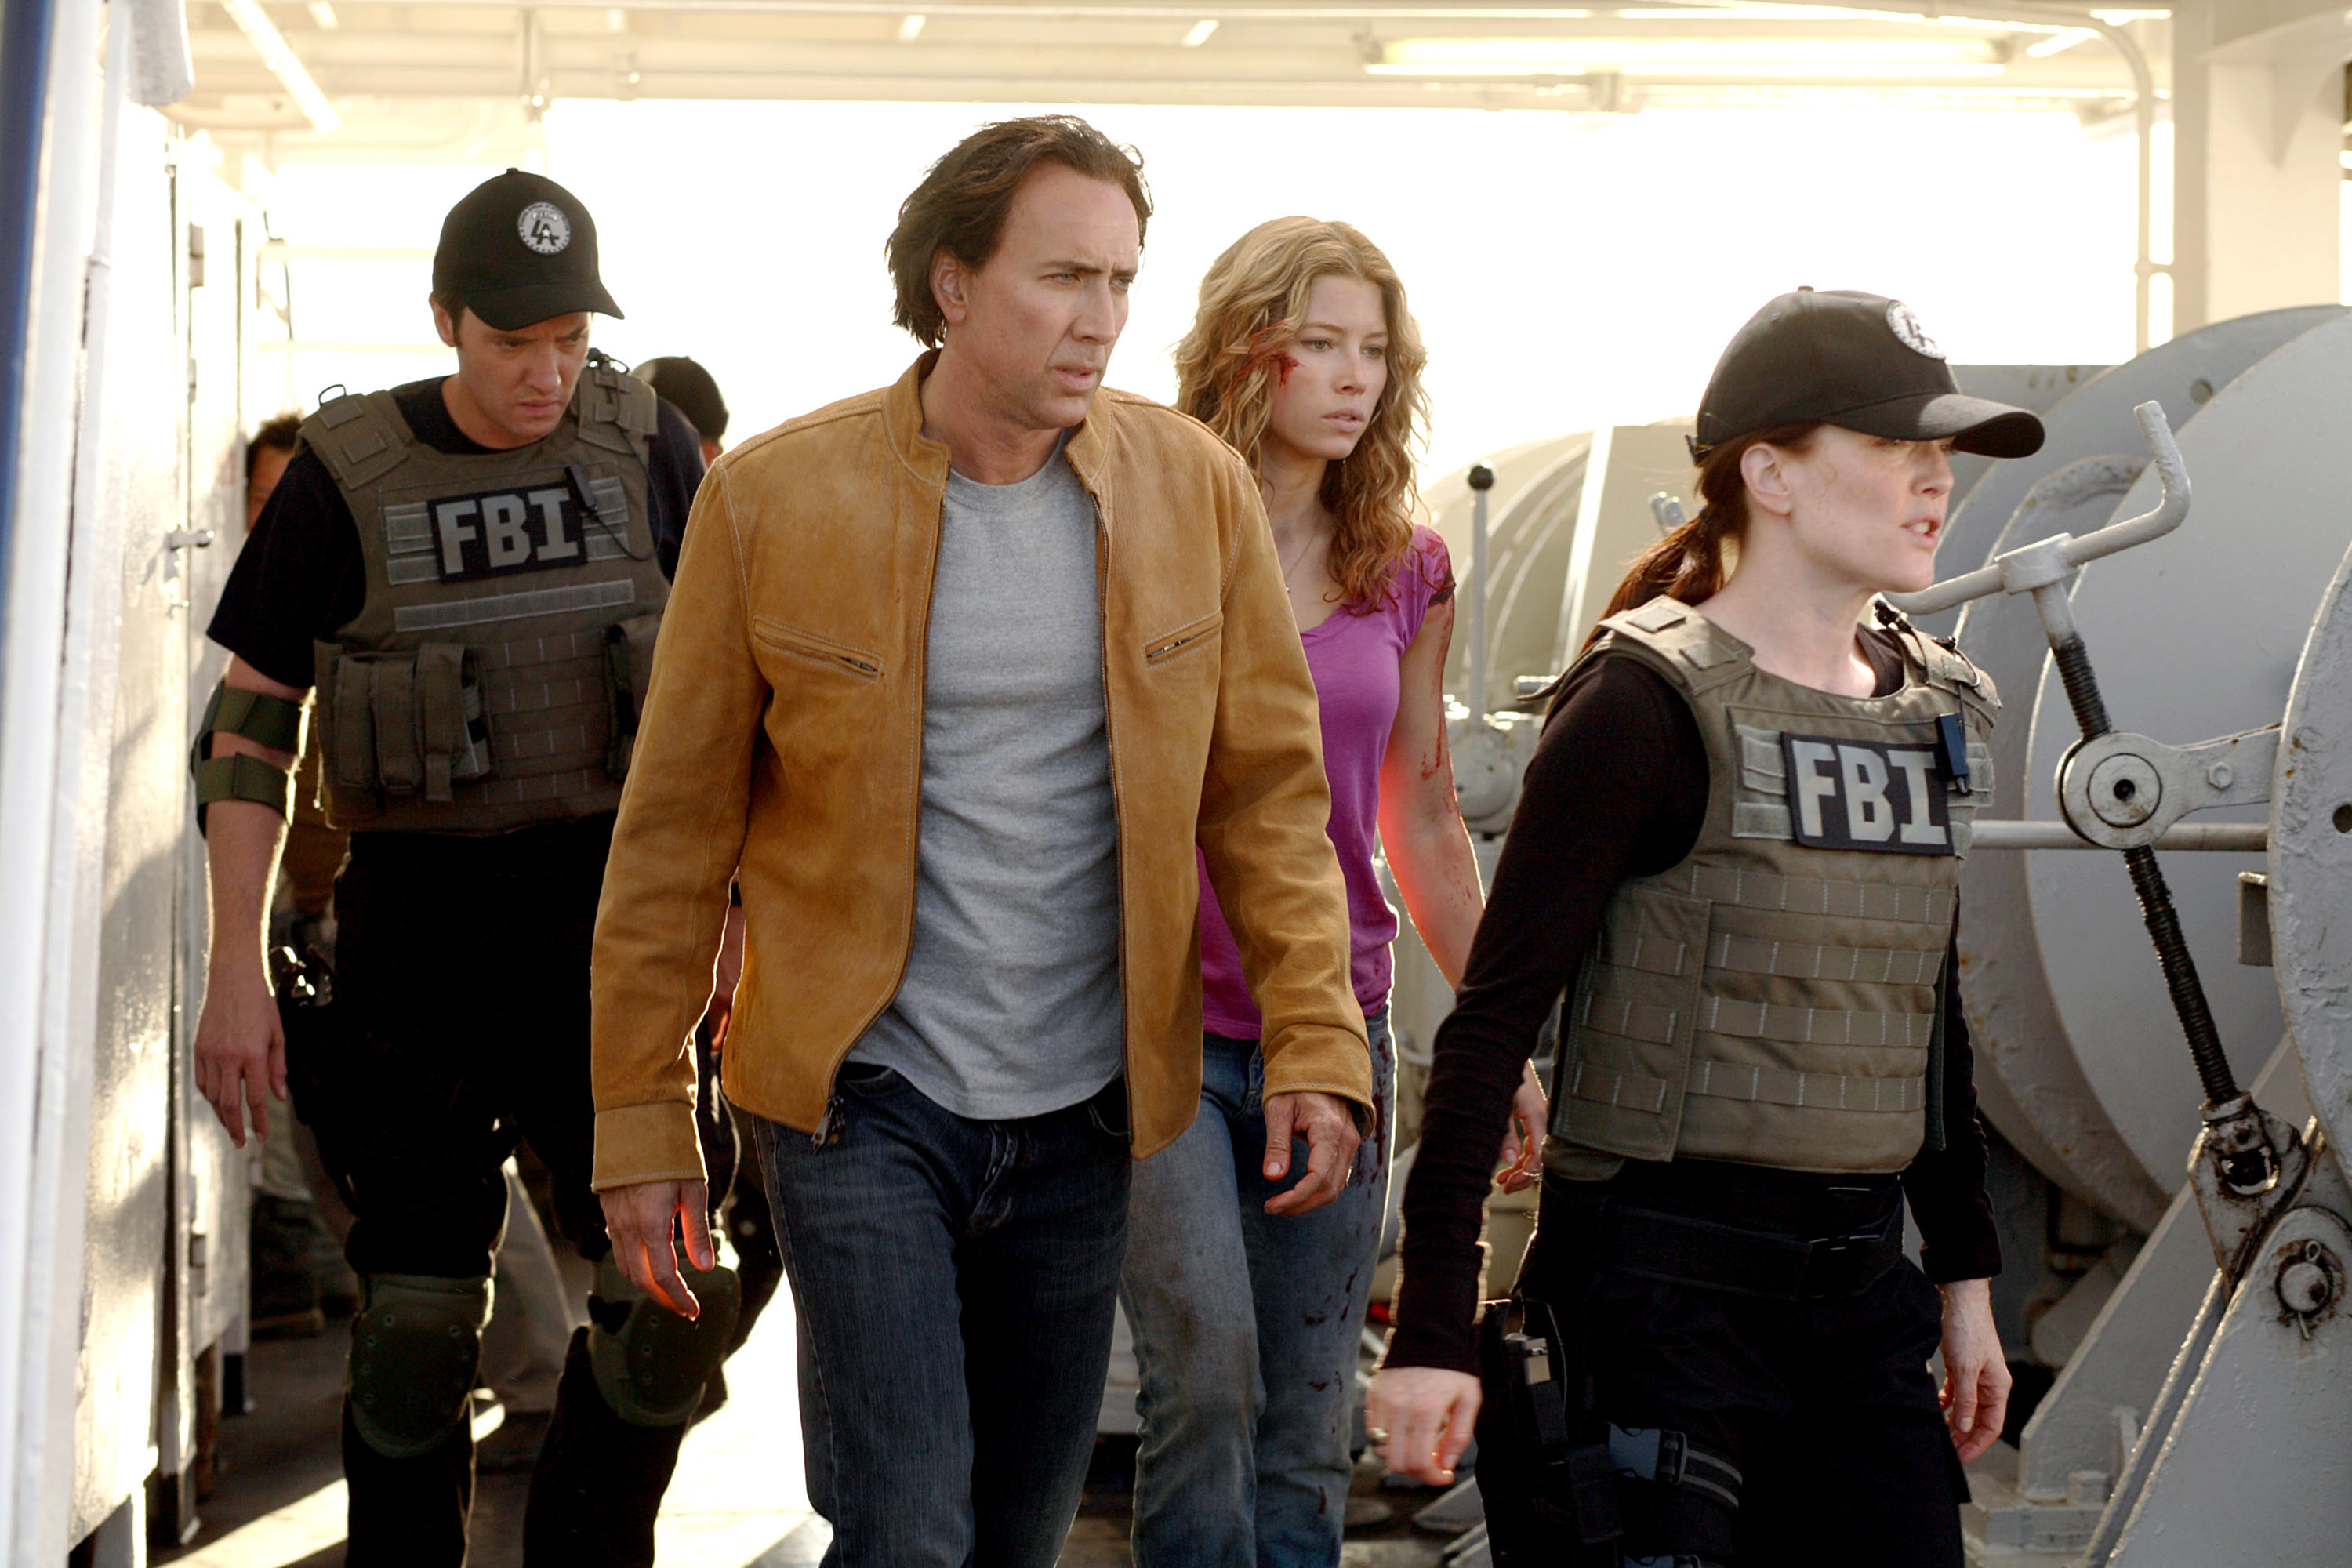 Four people, including two wearing FBI vests, walking